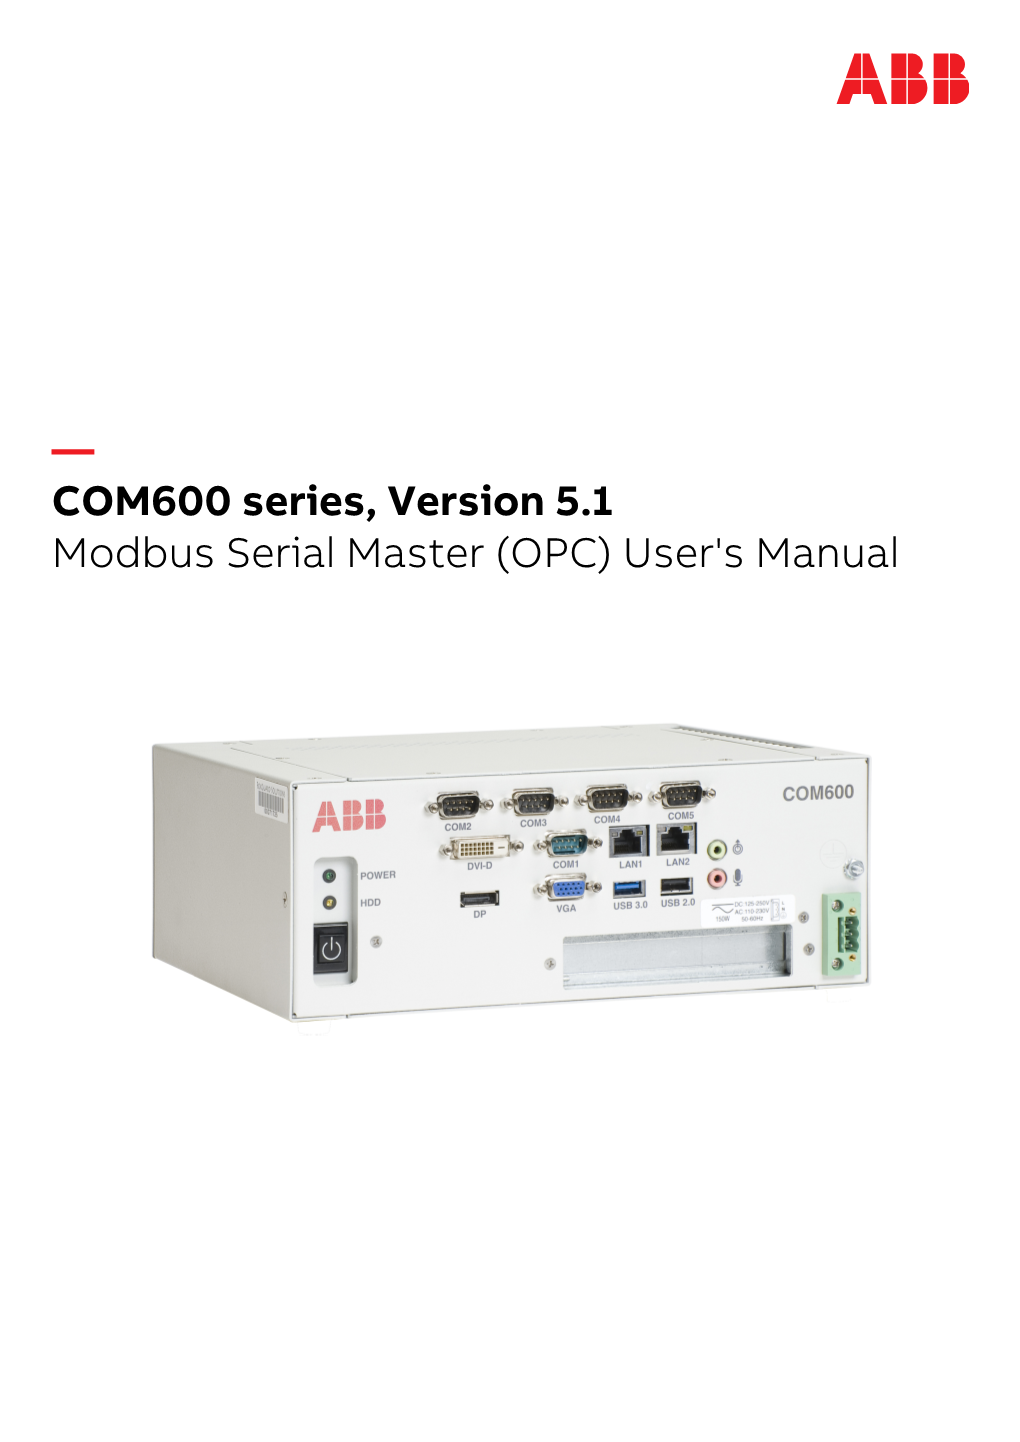 COM600 Series, Version 5.1 Modbus Serial Master (OPC) User's Manual